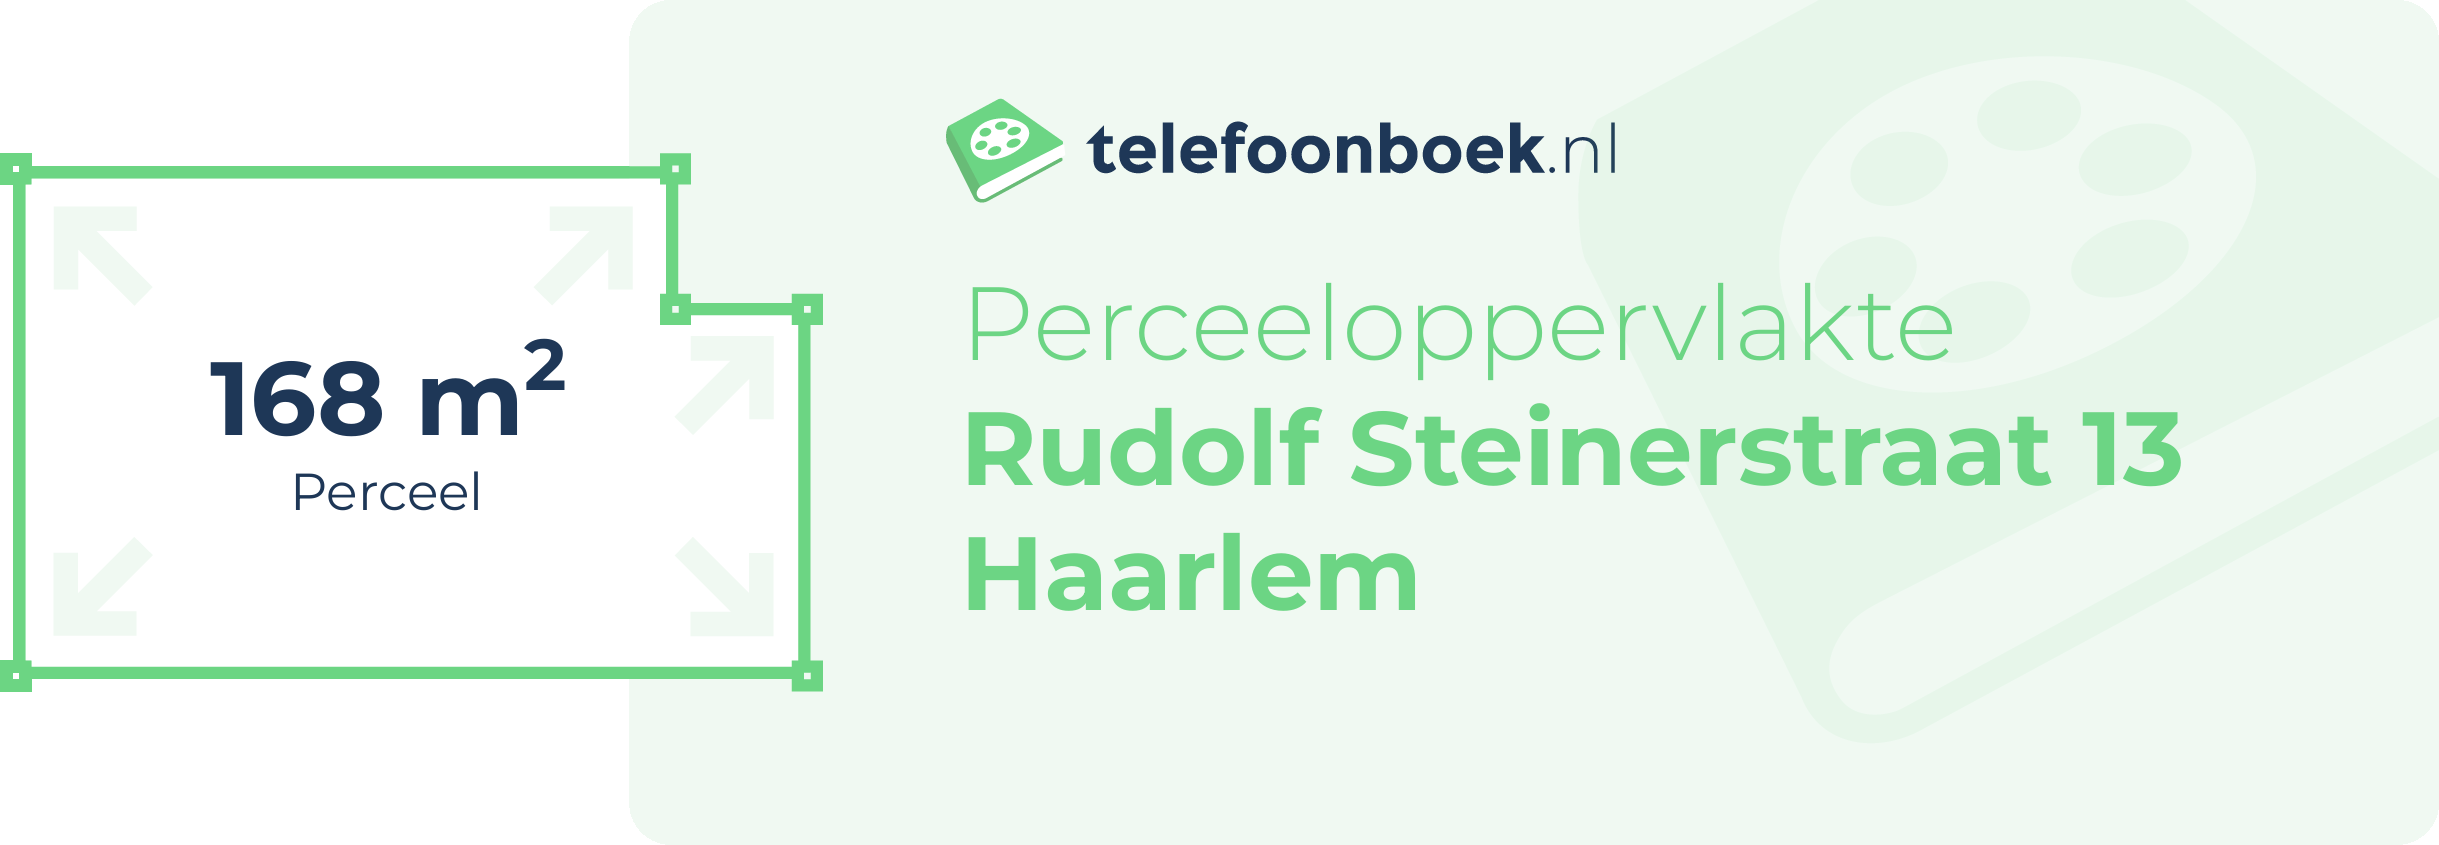 Perceeloppervlakte Rudolf Steinerstraat 13 Haarlem